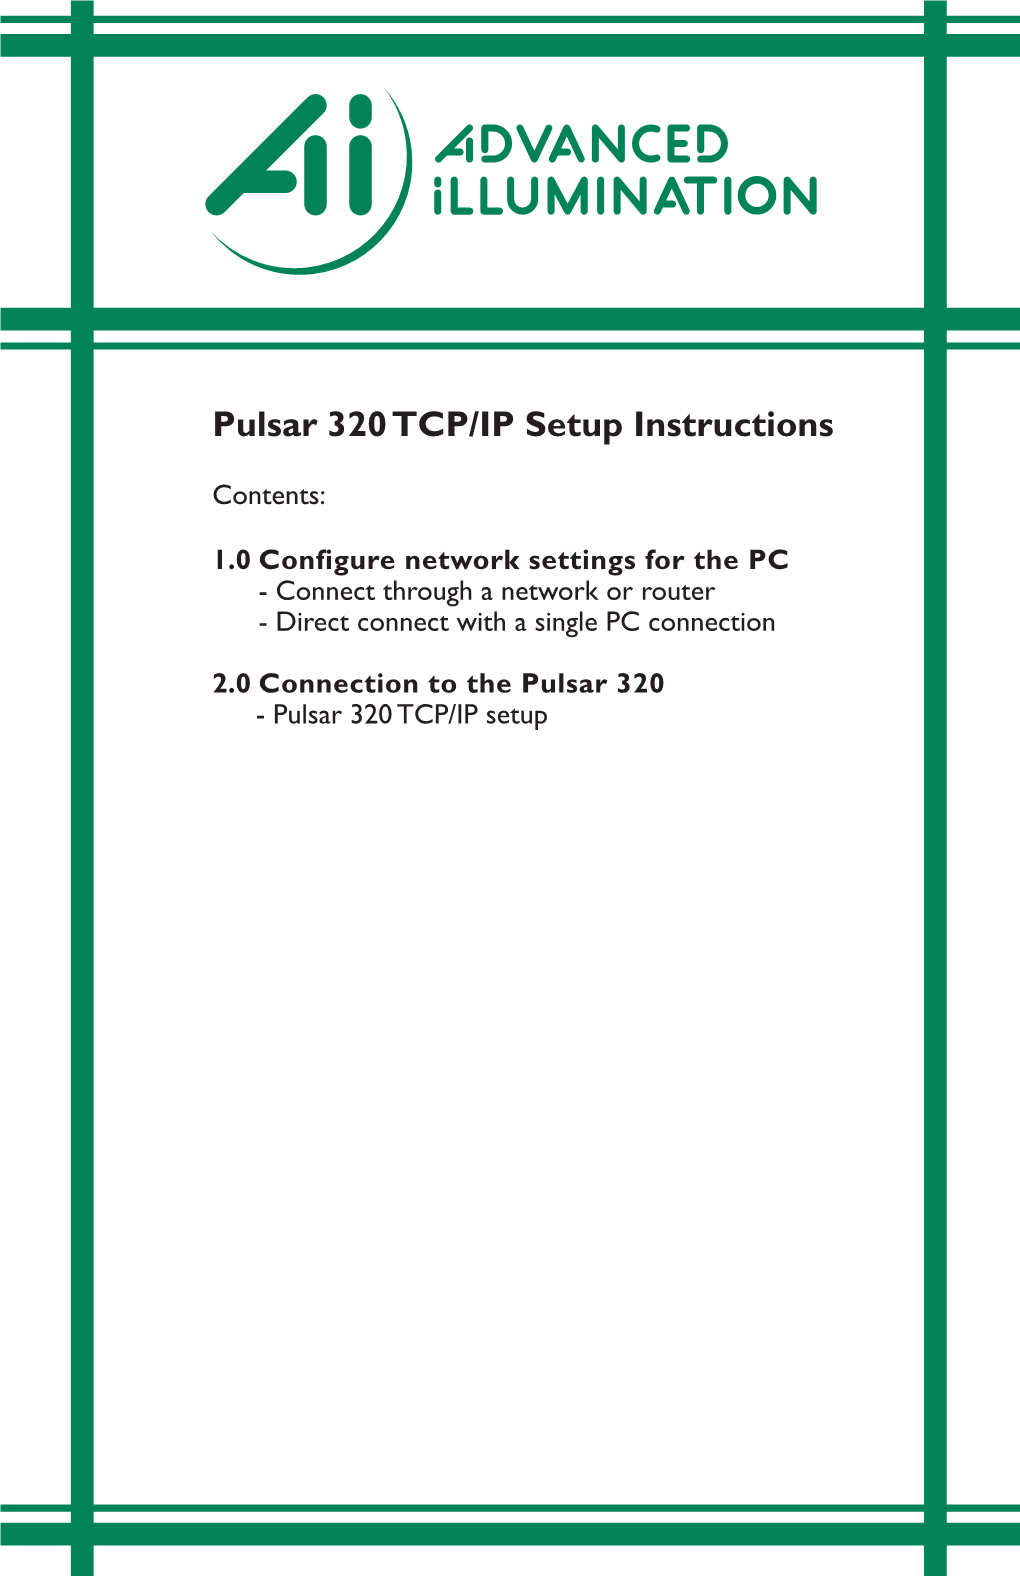 Pulsar 320 TCP/IP Setup Instructions (PDF)